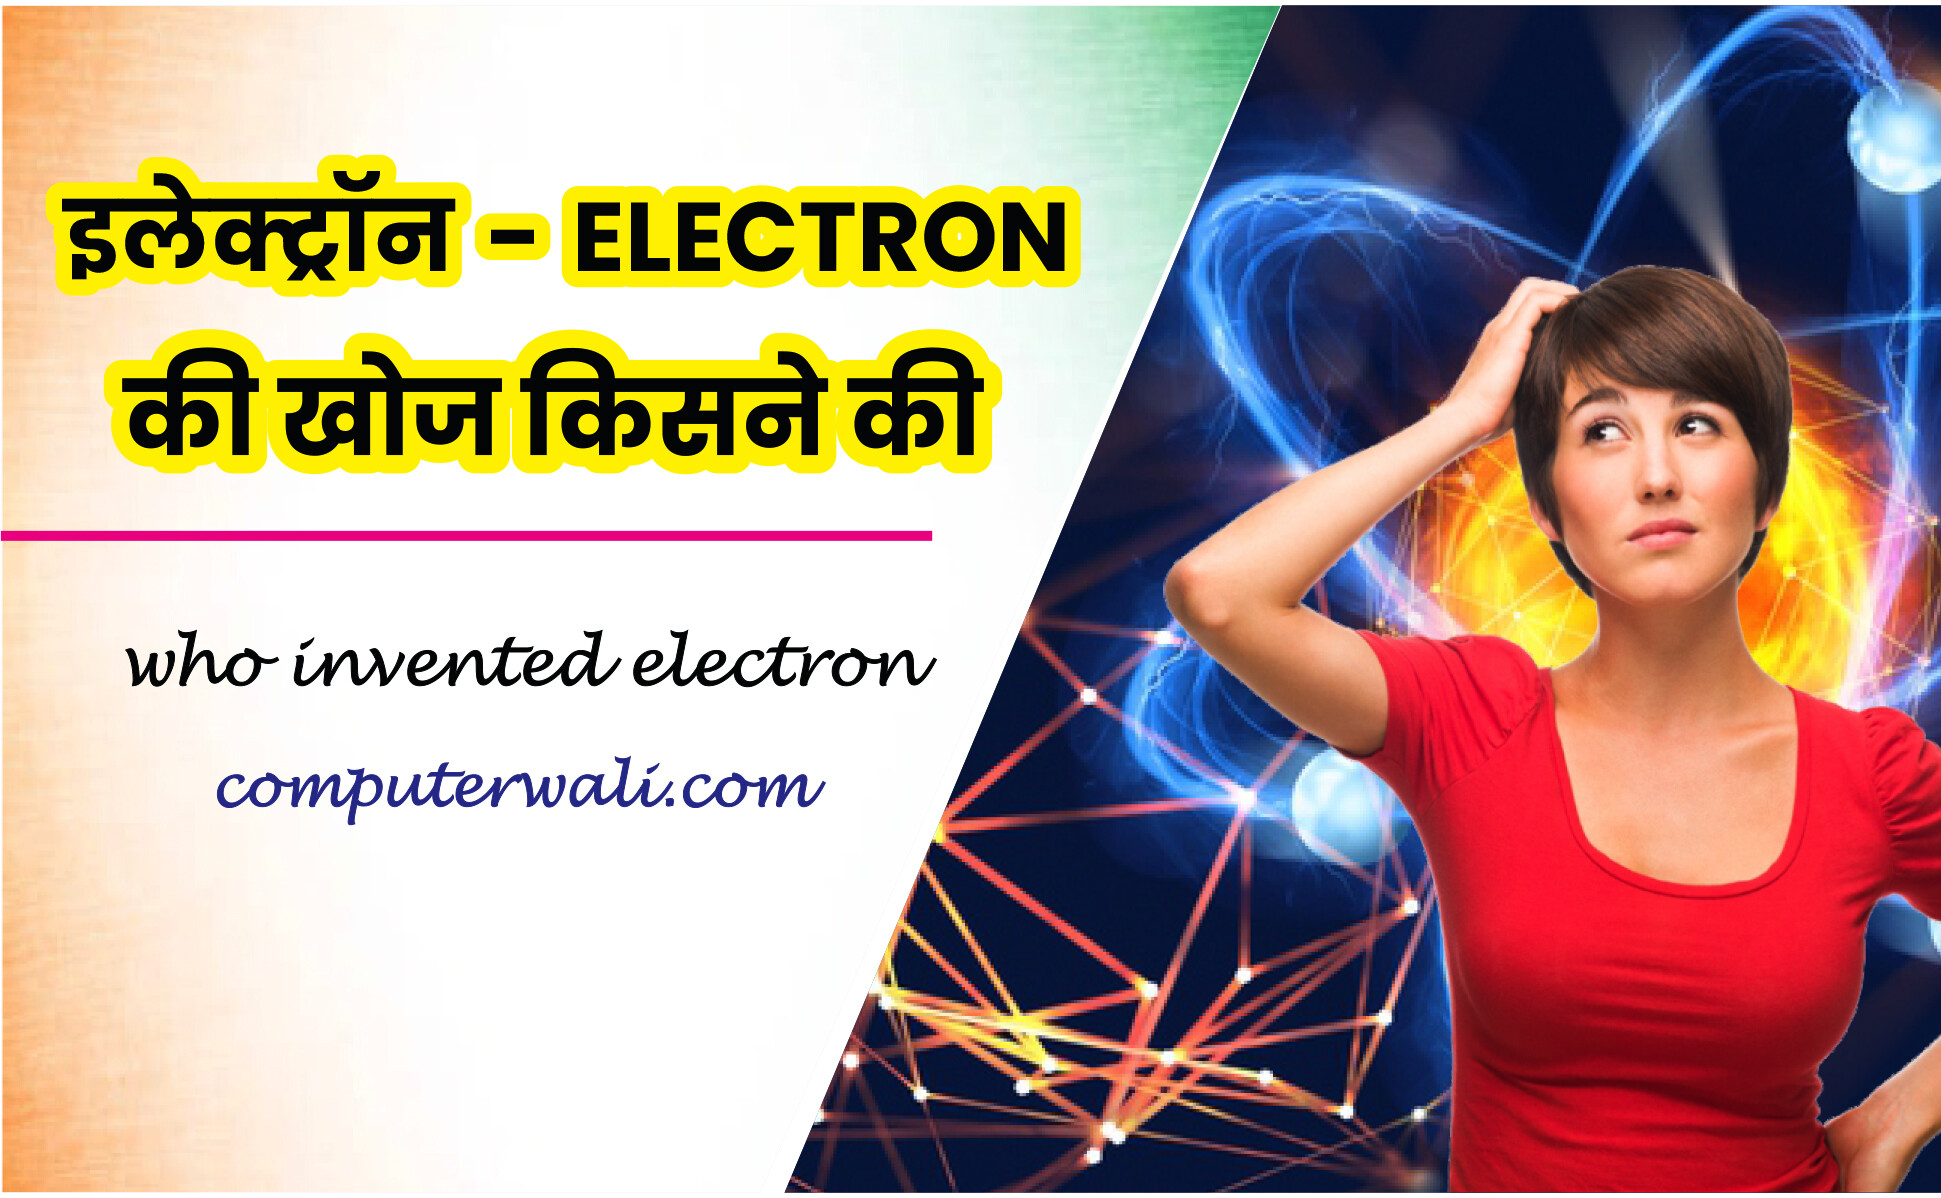 इलेक्ट्रॉन (Electron) की खोज किसने की - Electron Ki Khoj Kisne Ki Thi